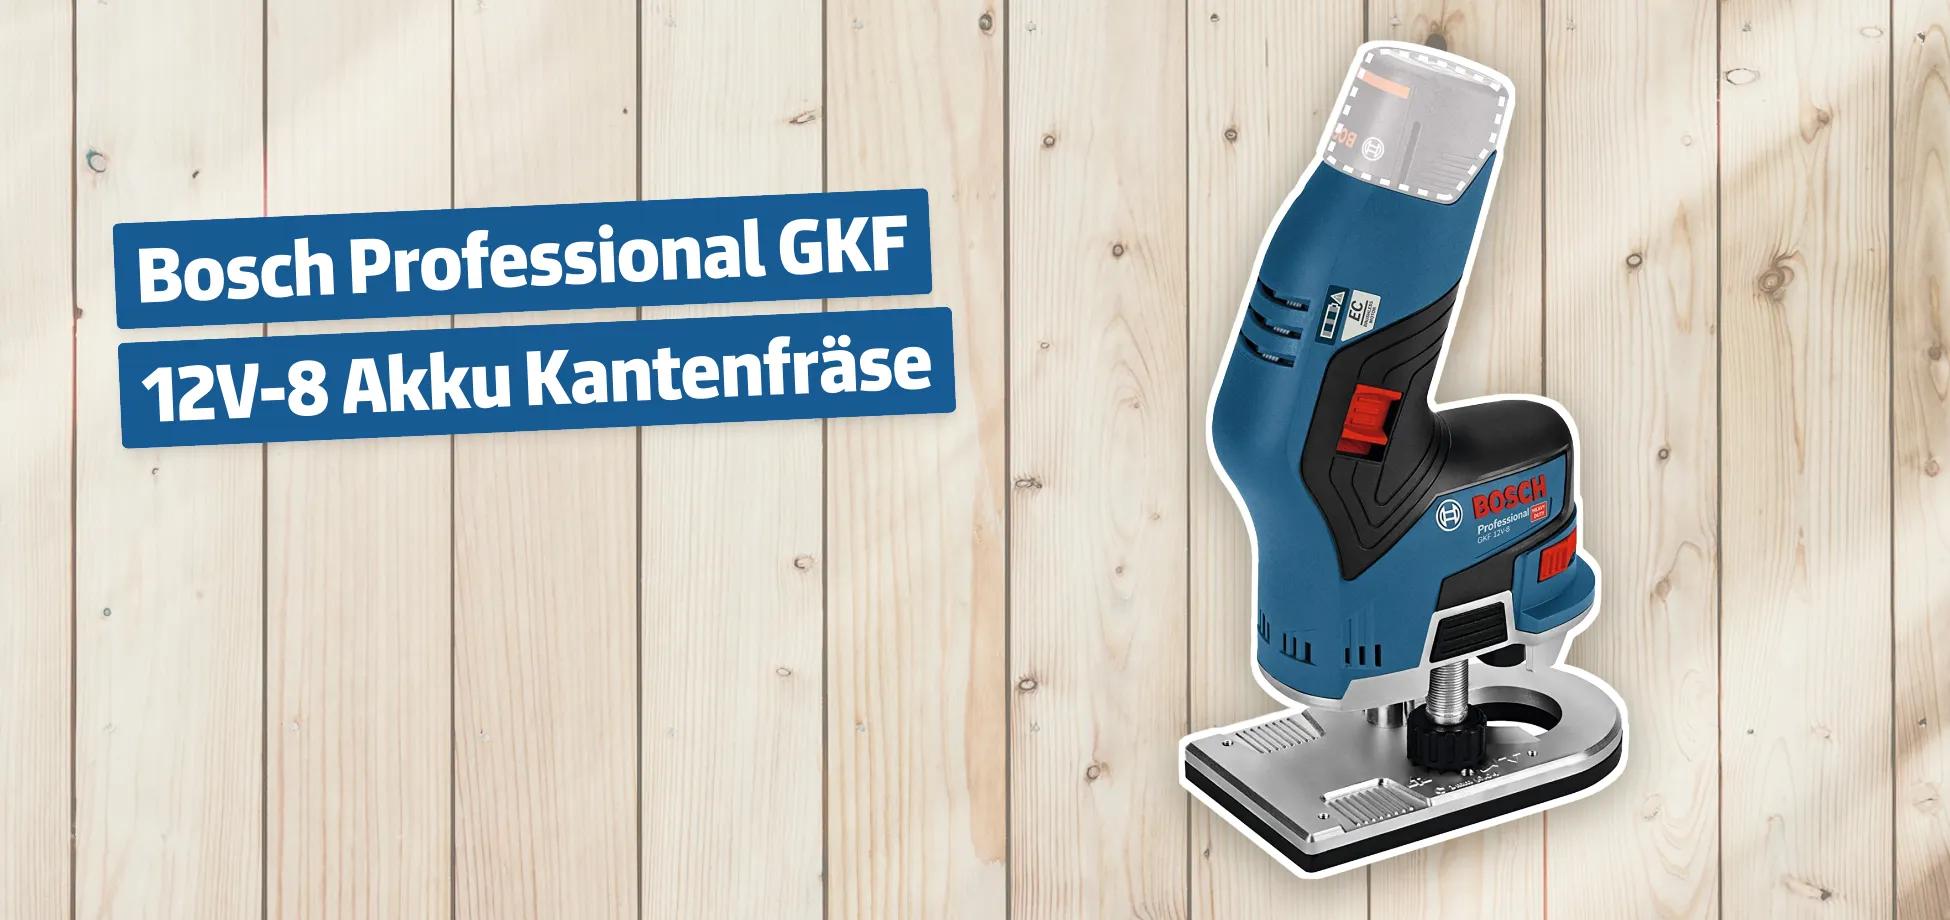 Bosch Professional GKF 12V-8 Akku Kantenfräse